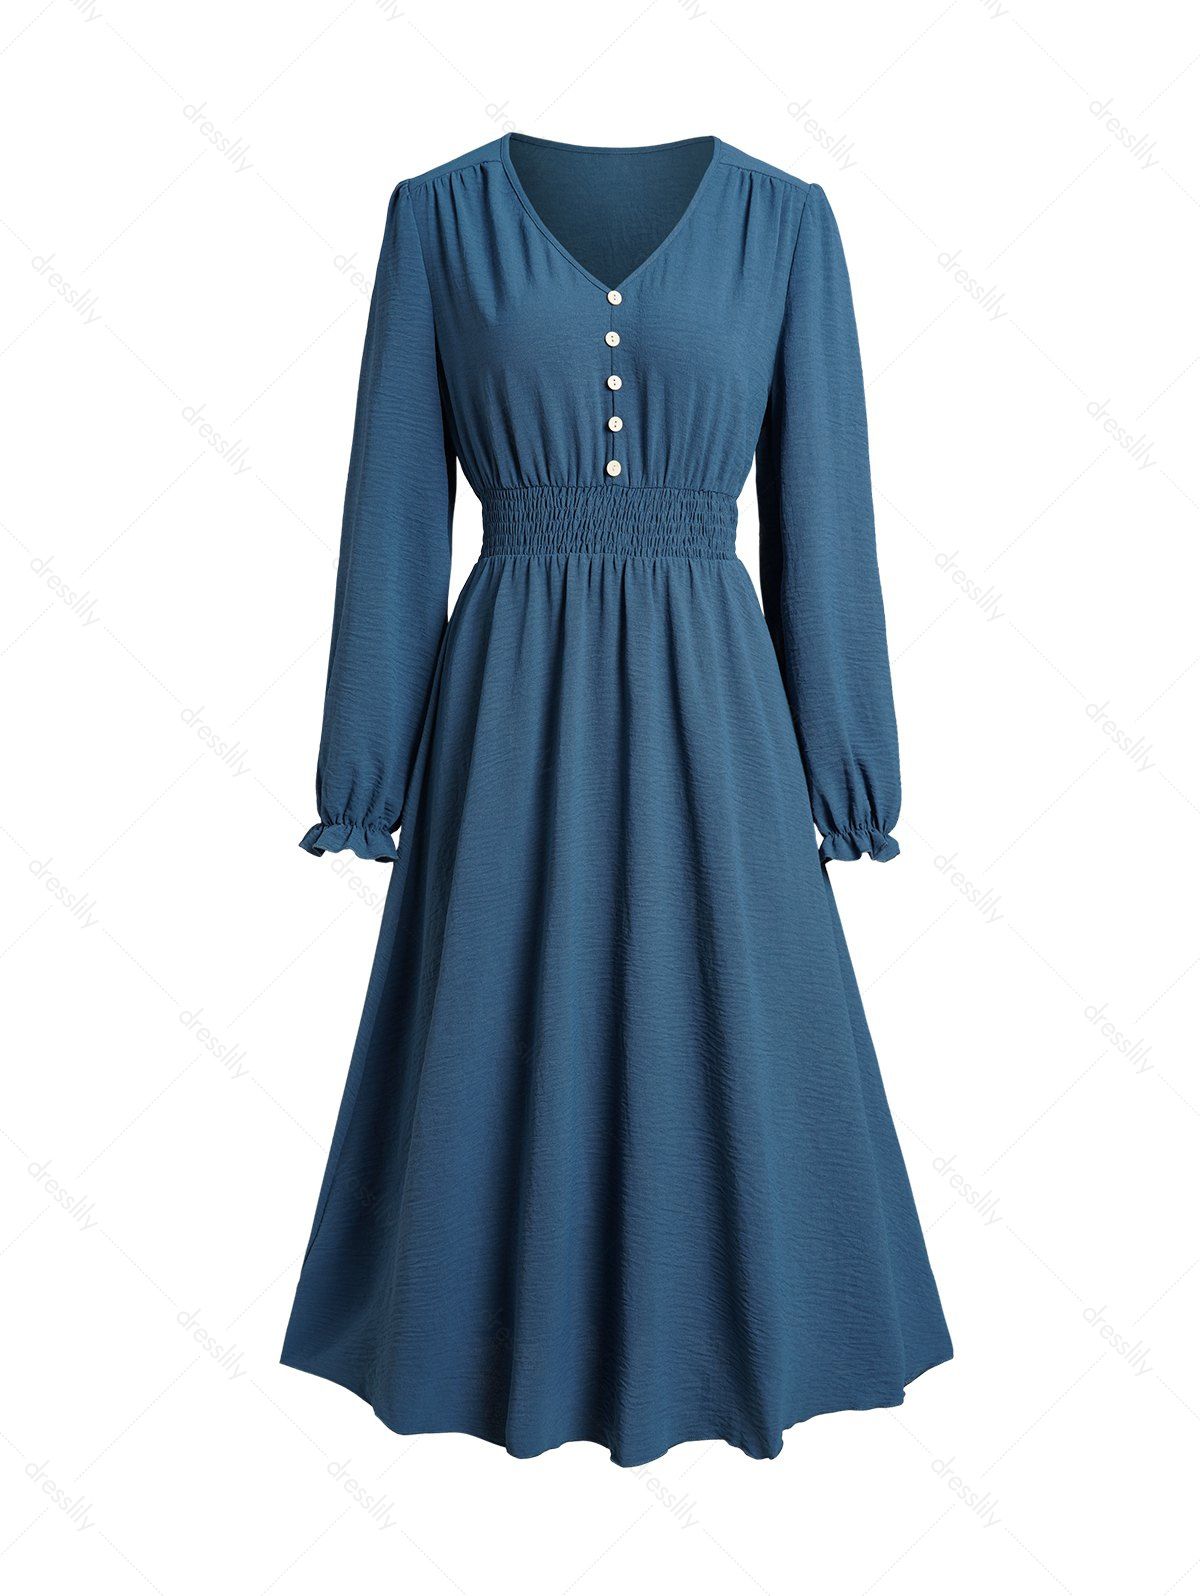 Dresslily Women Smocked Waist Dress Plain Color Mock Button V Neck Casual Midi Dress Clothing Xl Deep blue